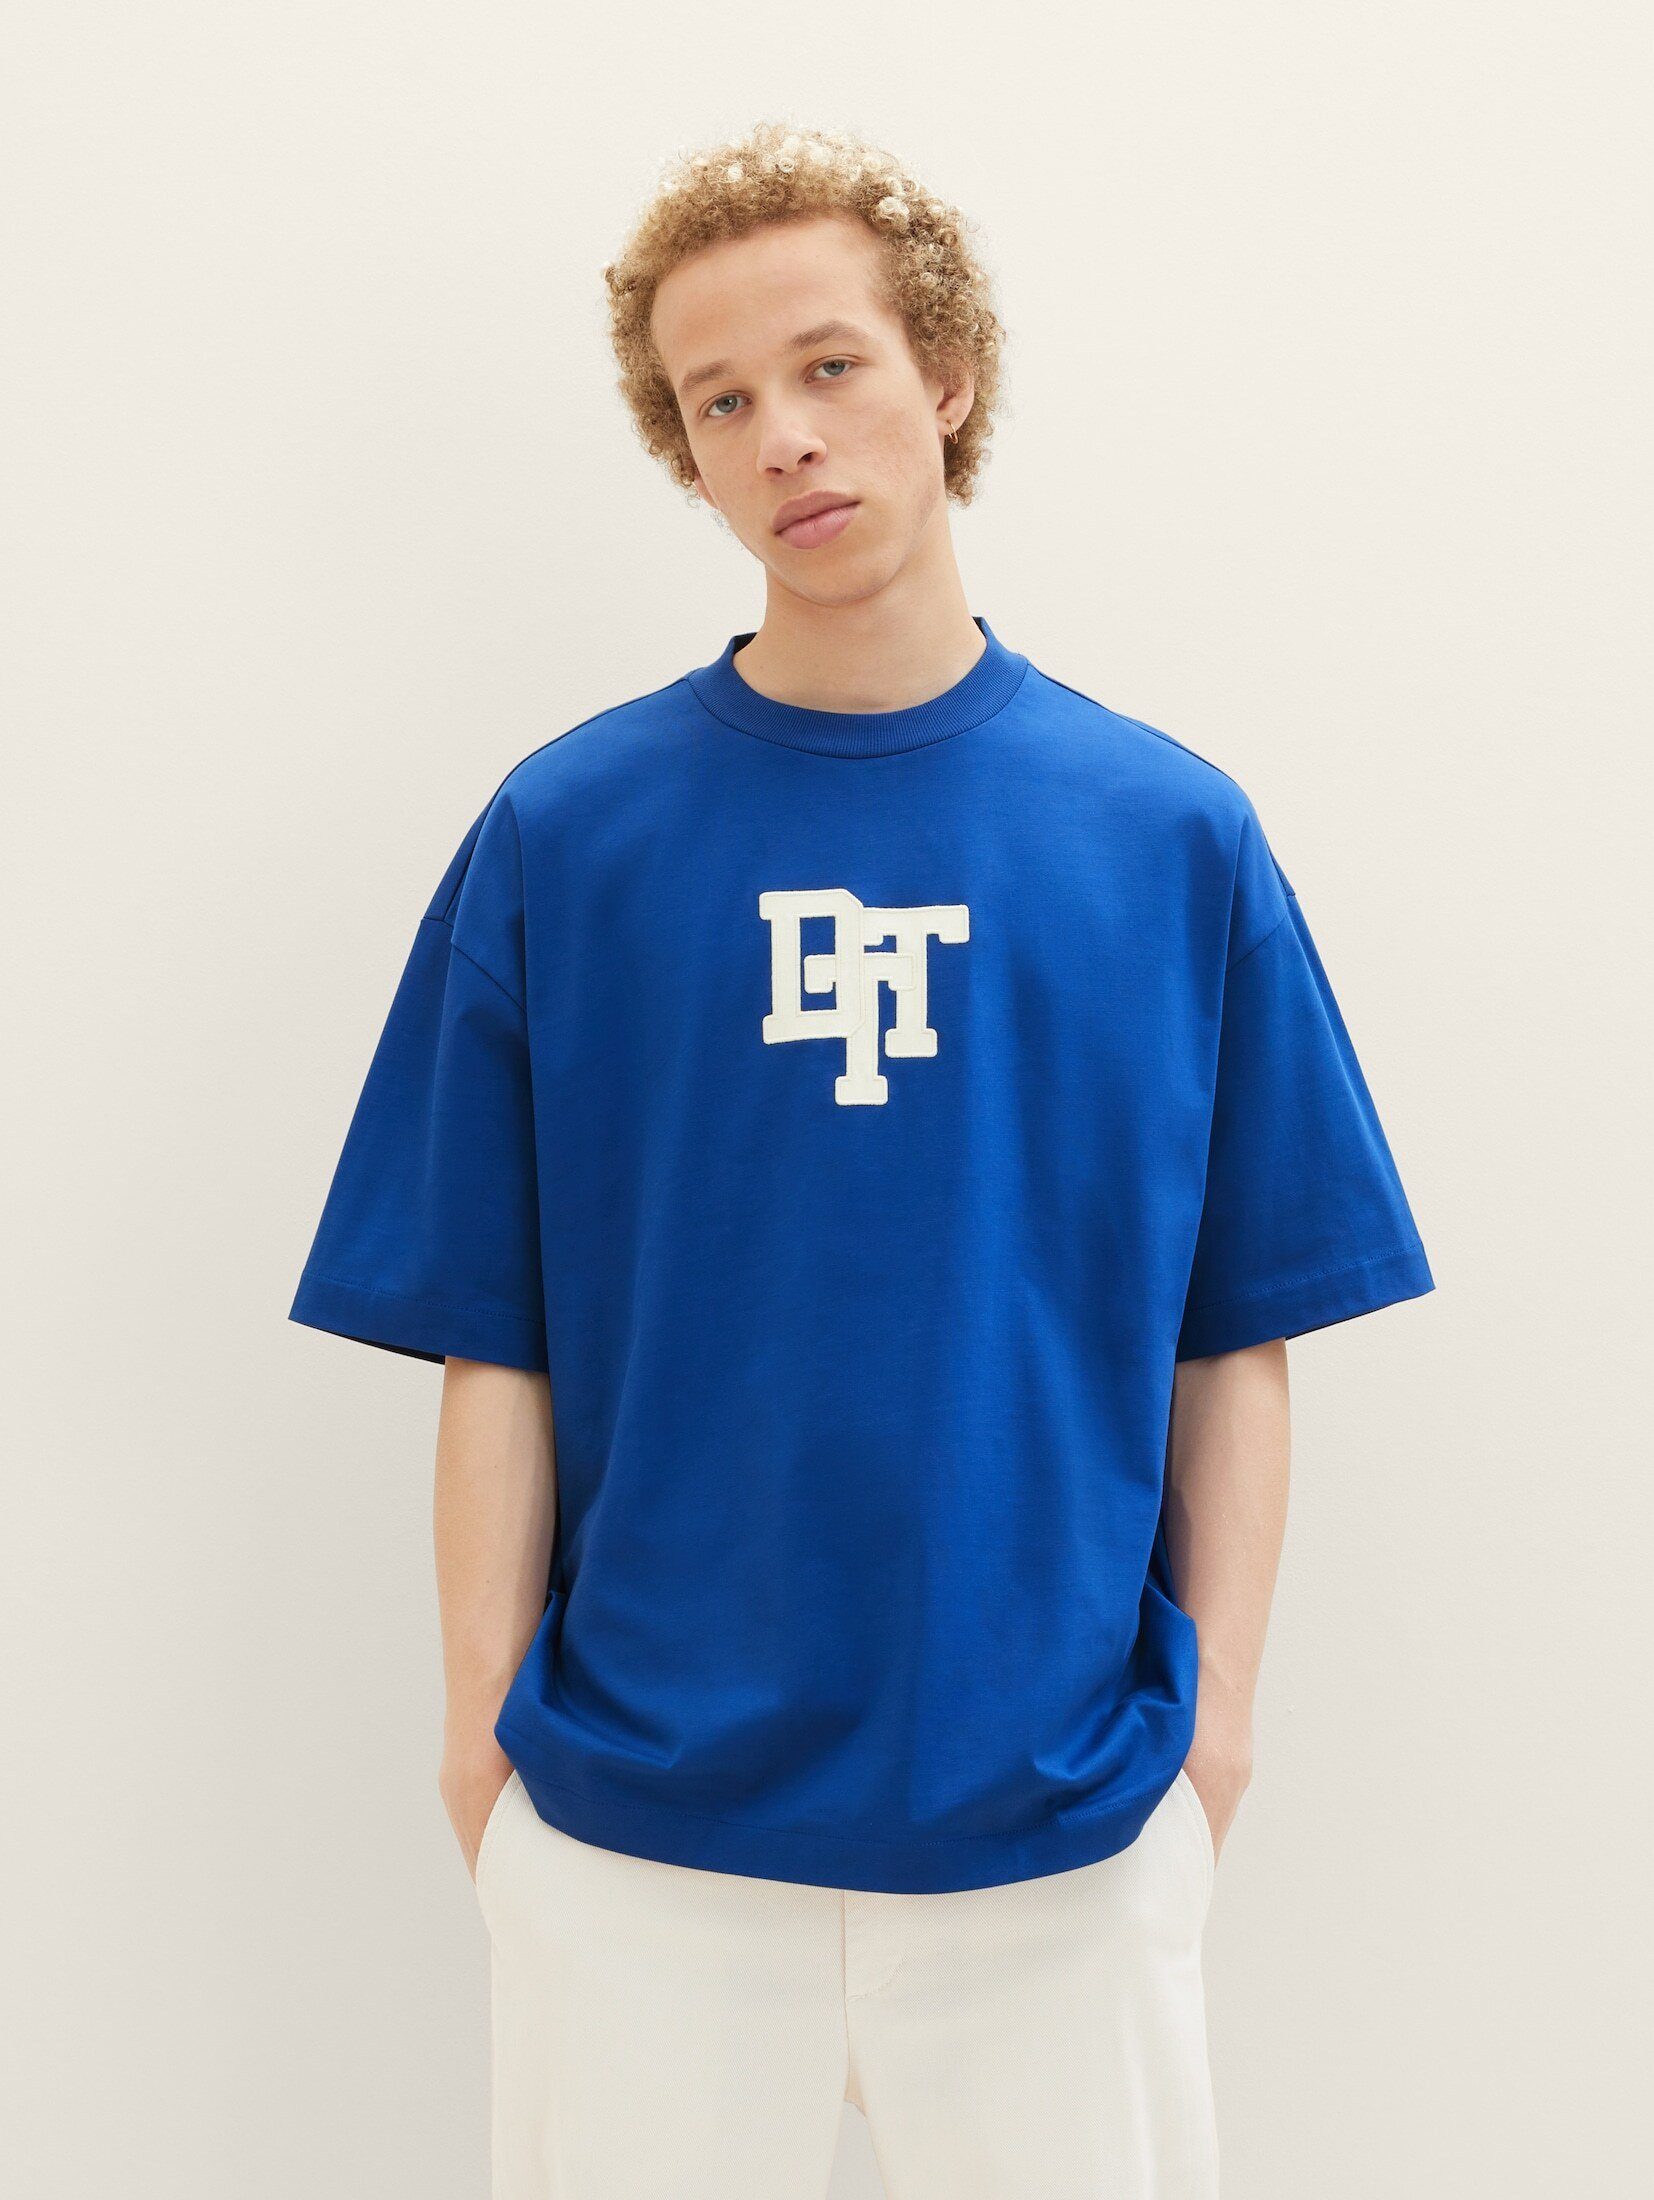 TOM TAILOR Denim T-Shirt blue mit T-Shirt royal shiny Applikation Oversized